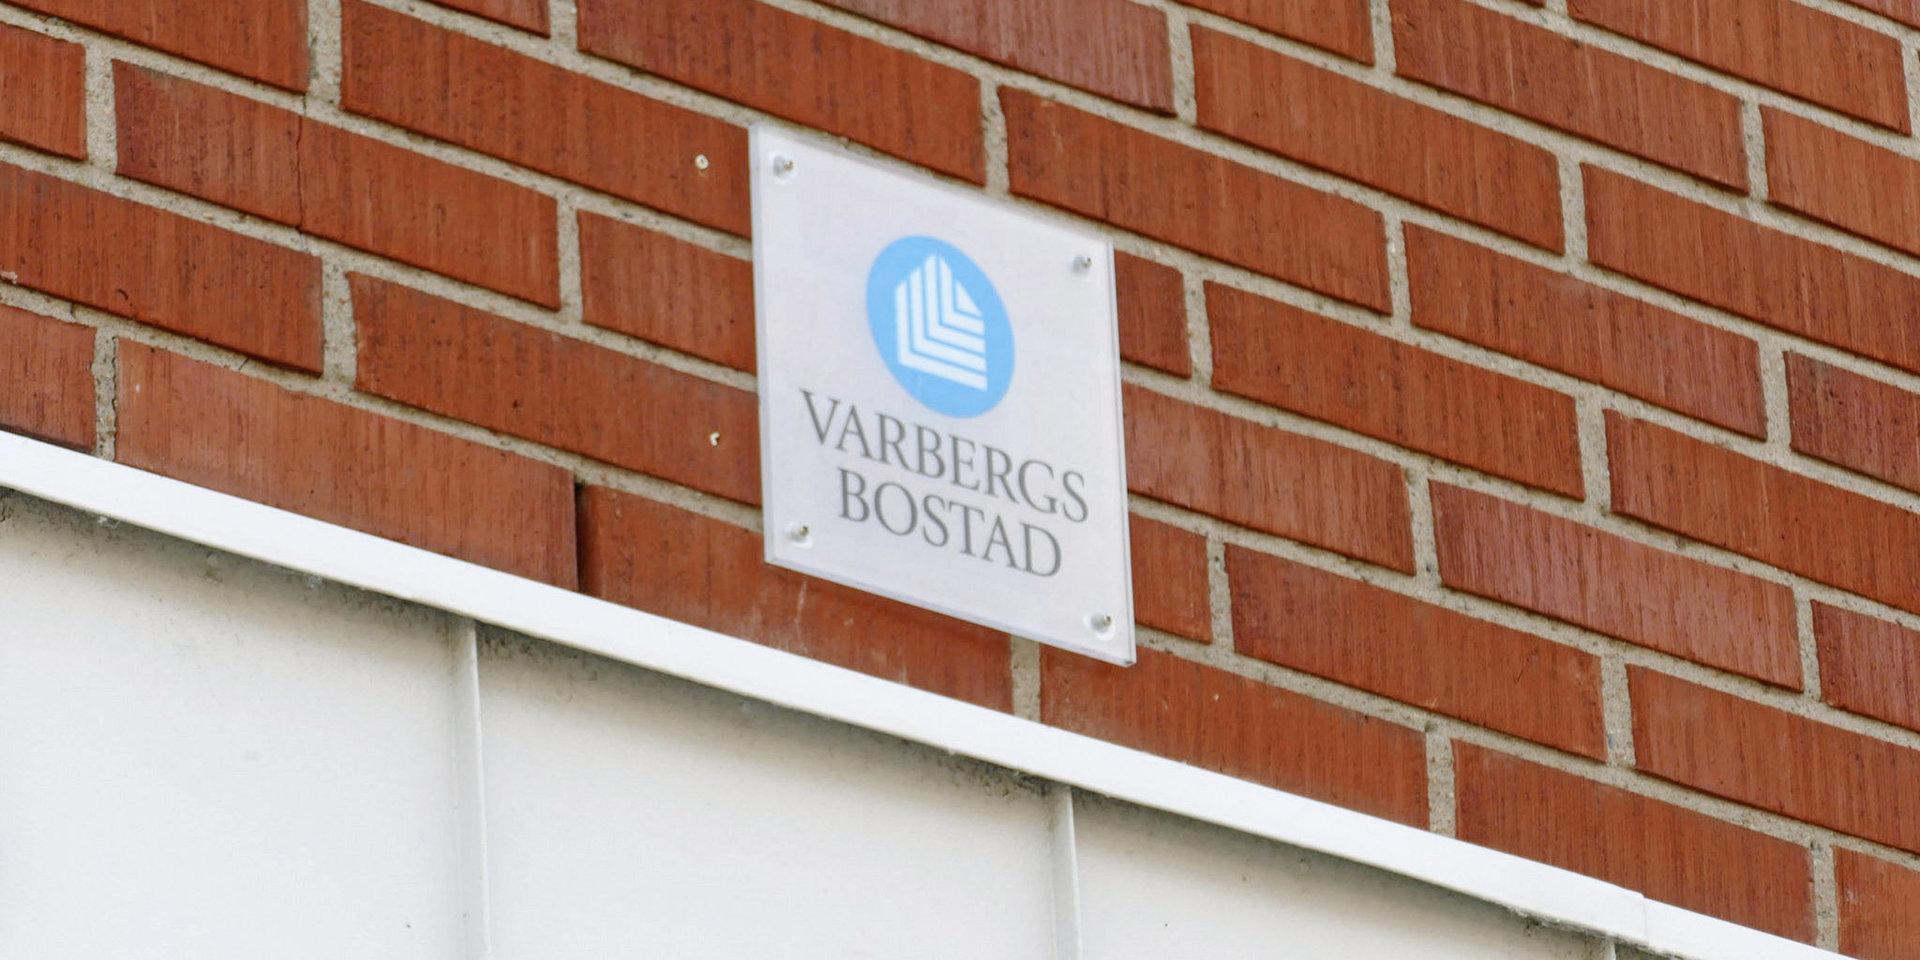 Varbergs Bostad-skylt i centrala Varberg.